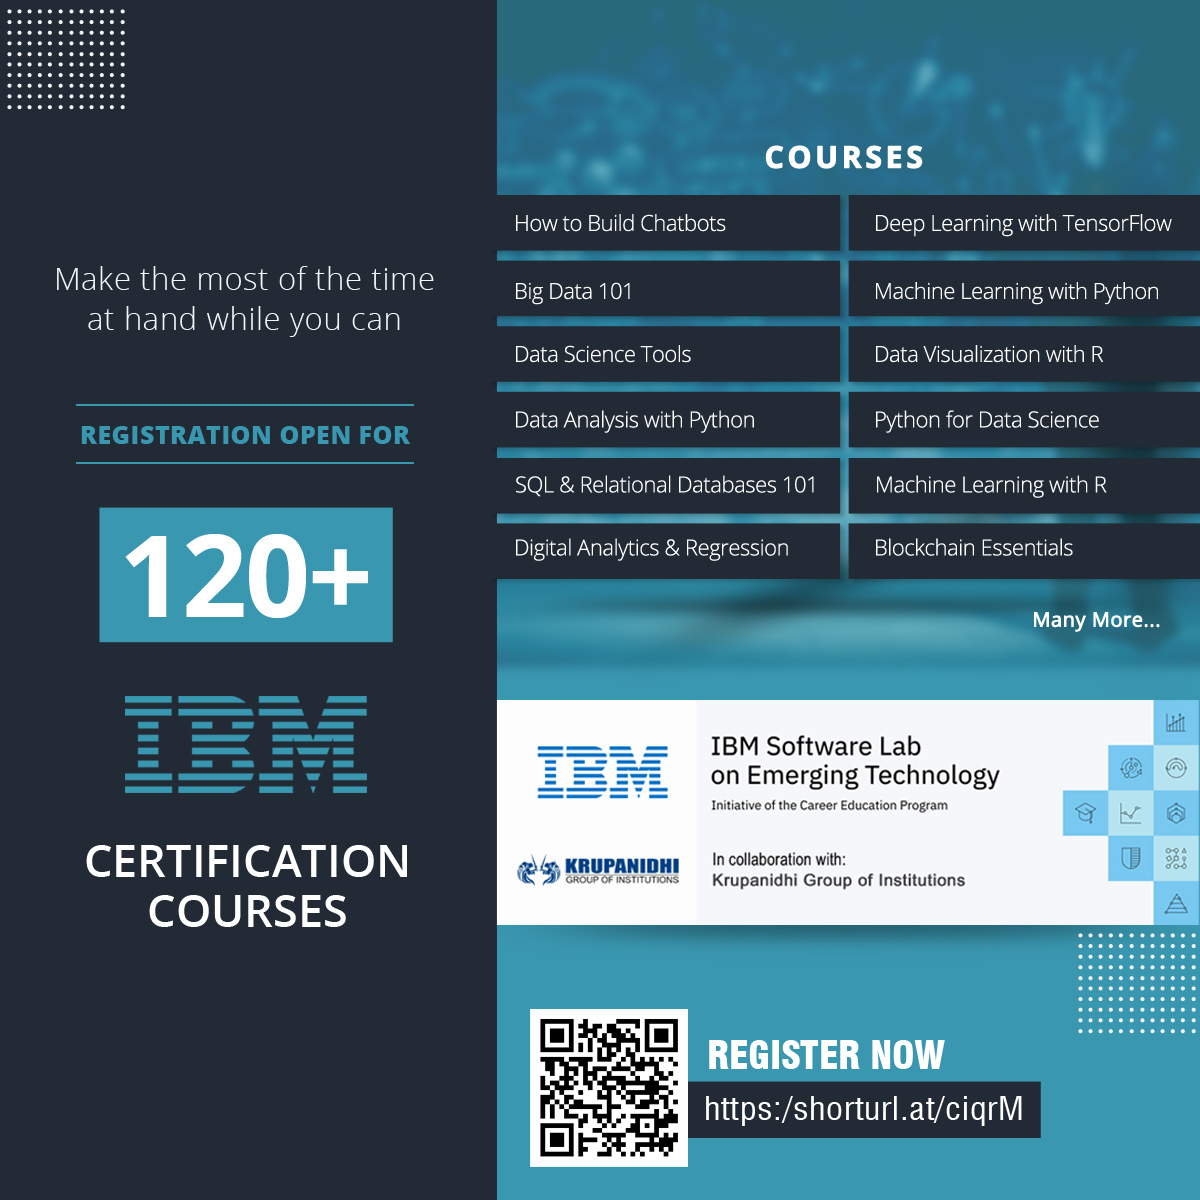 IBM certification courses